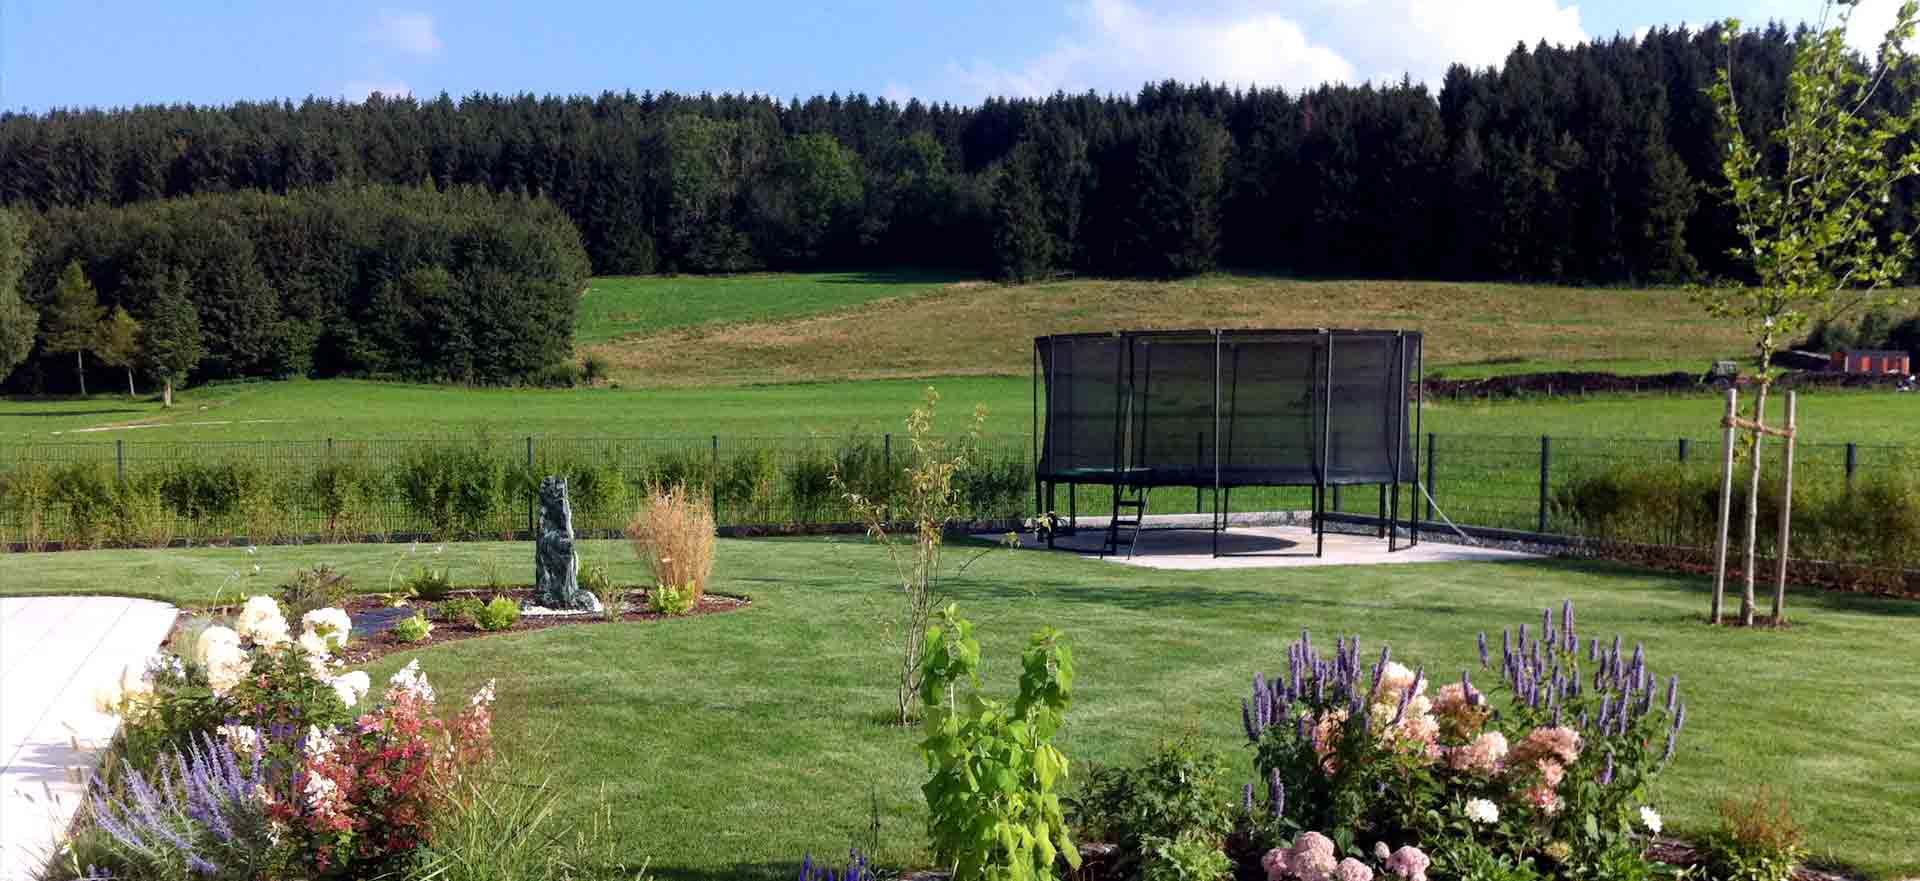 May & Glass - Gartenneugestaltung